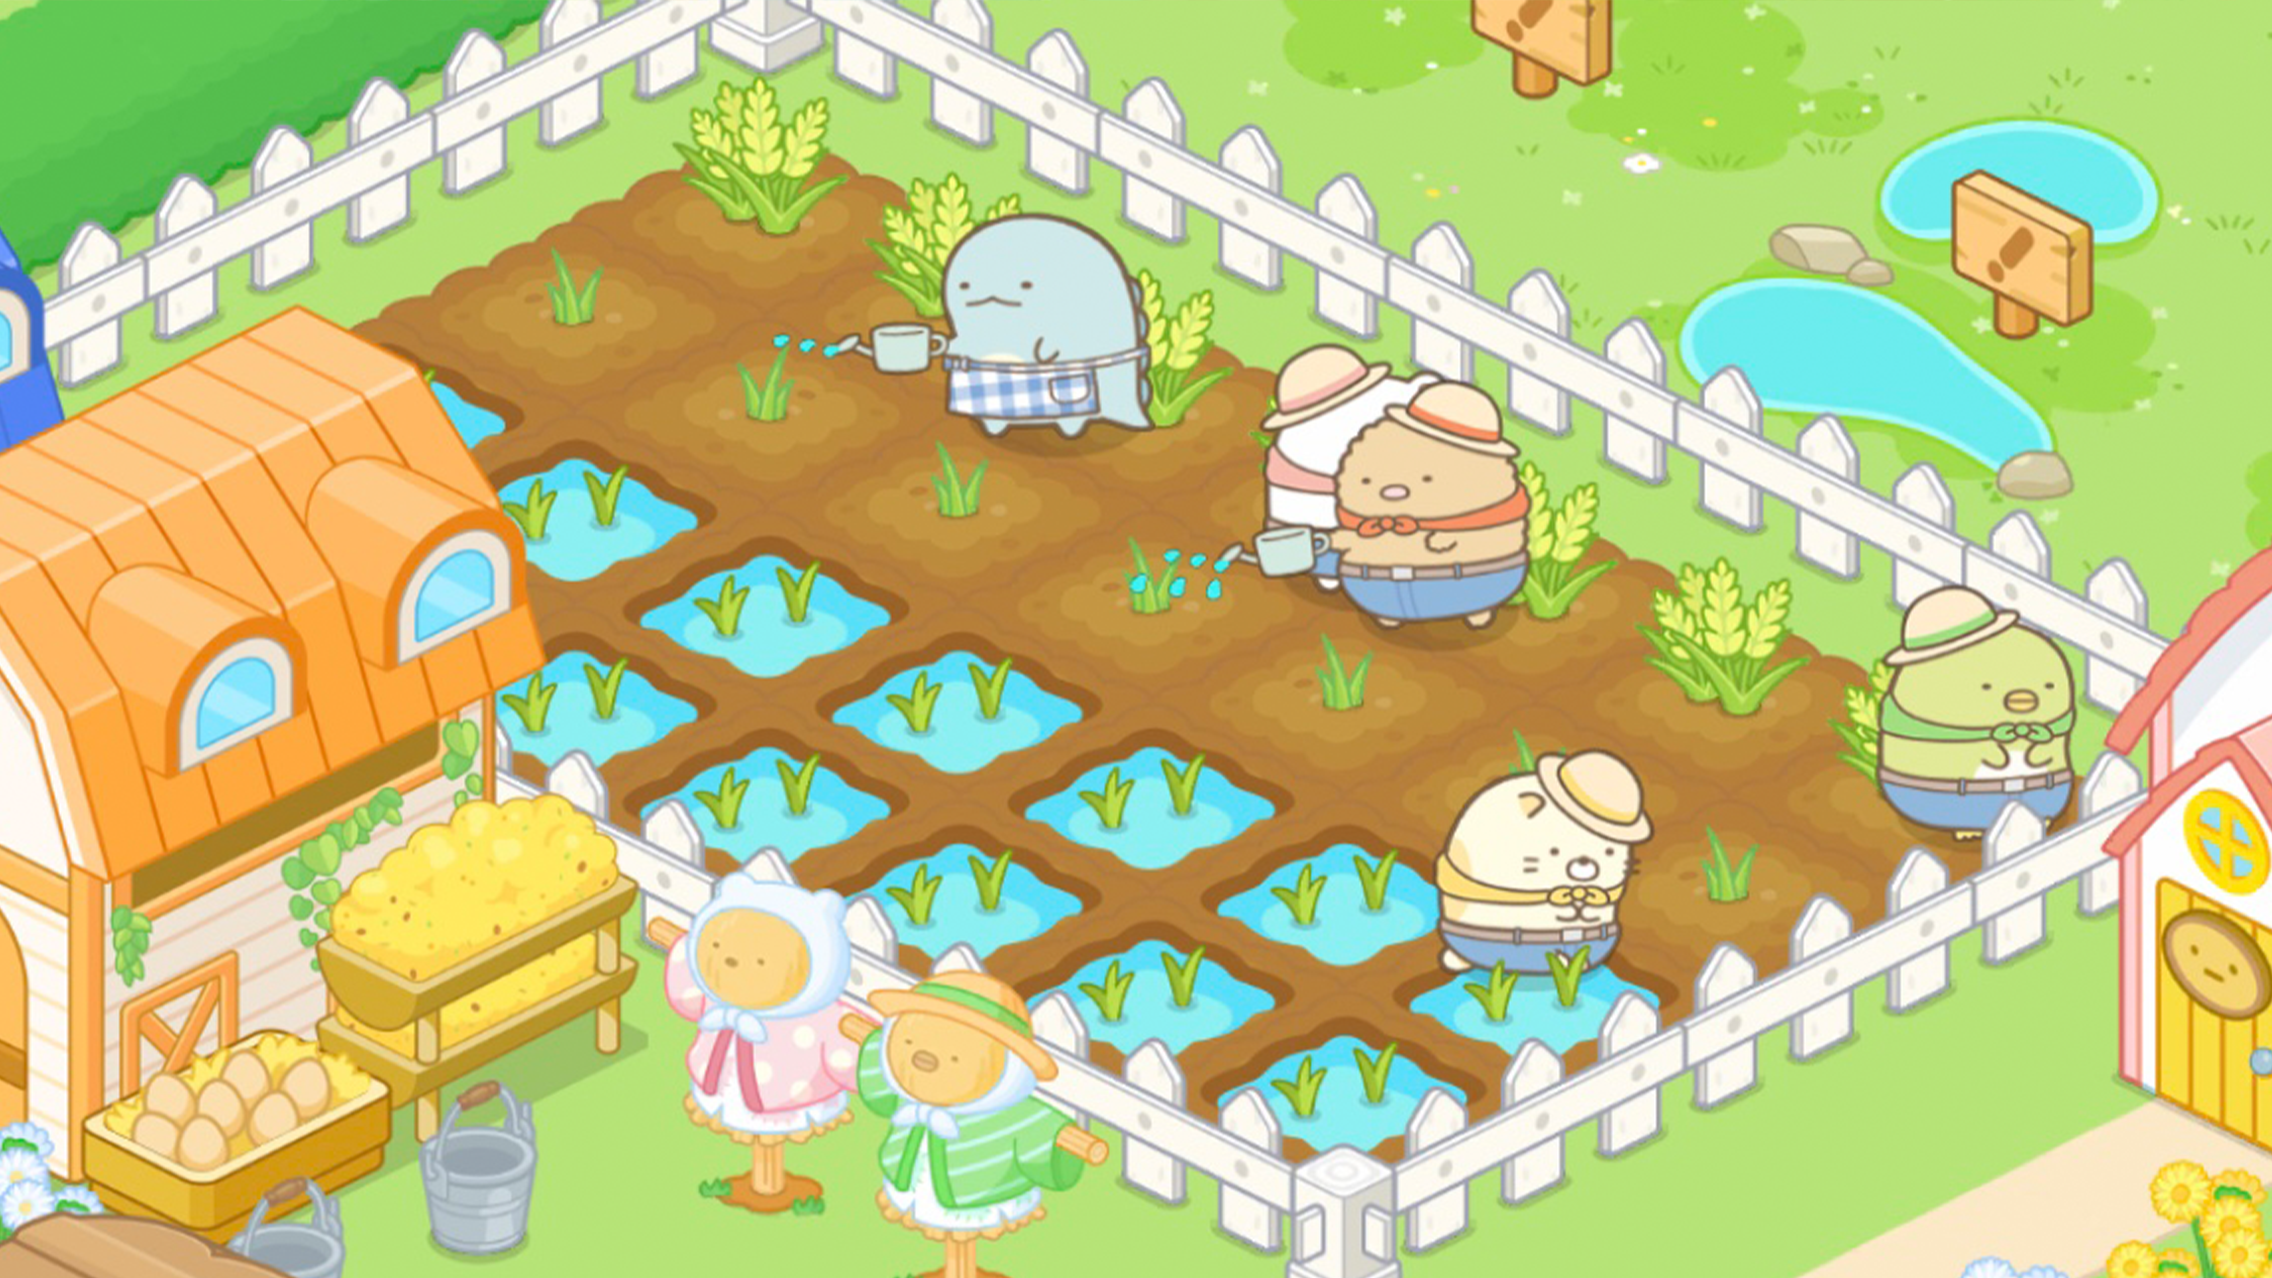 Screenshot of Sumikkogurashi Farm